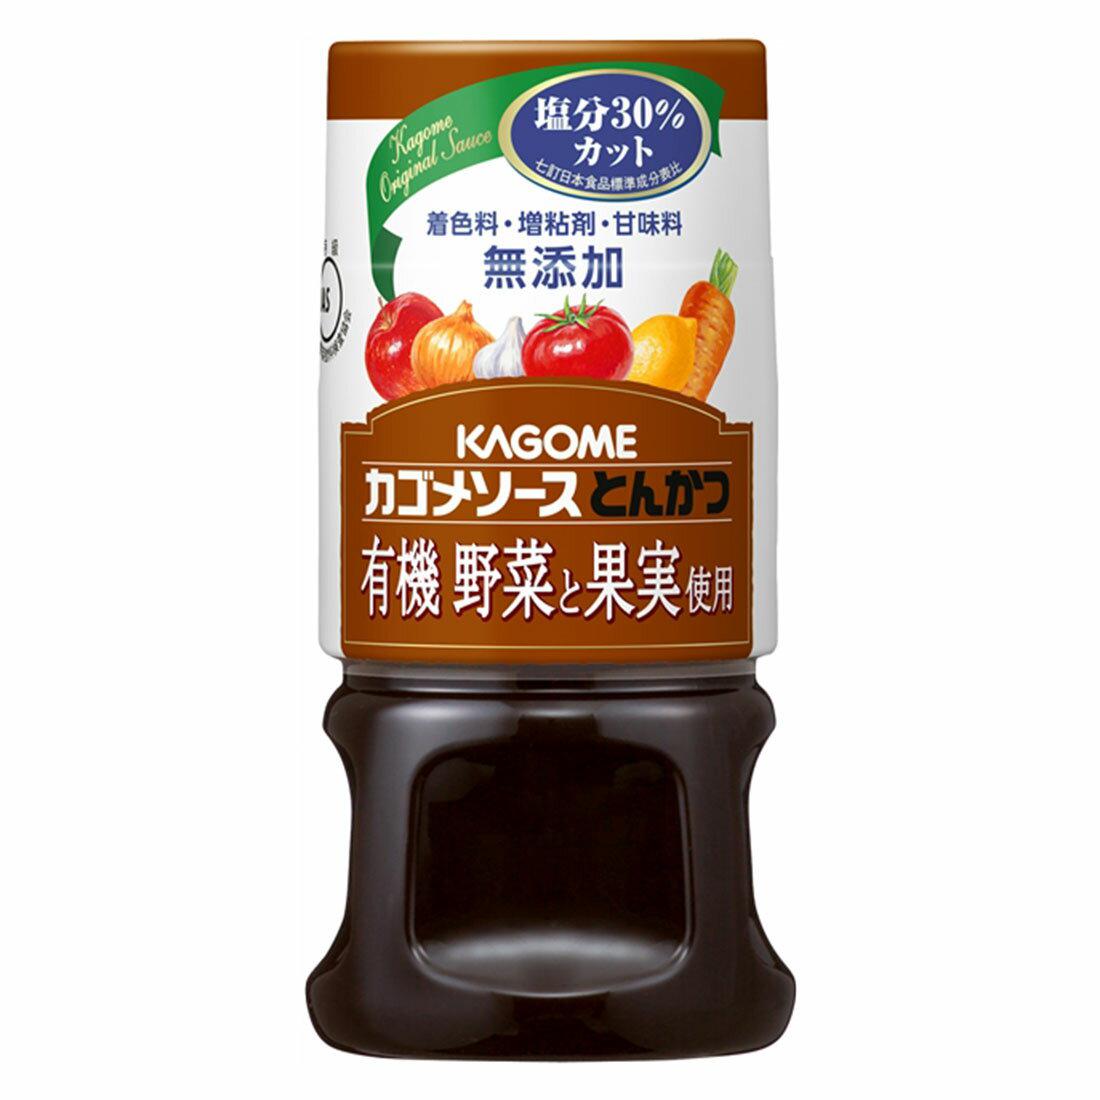 Kagome Low Sodium Additive Free Organic Tonkatsu Sauce 160ml